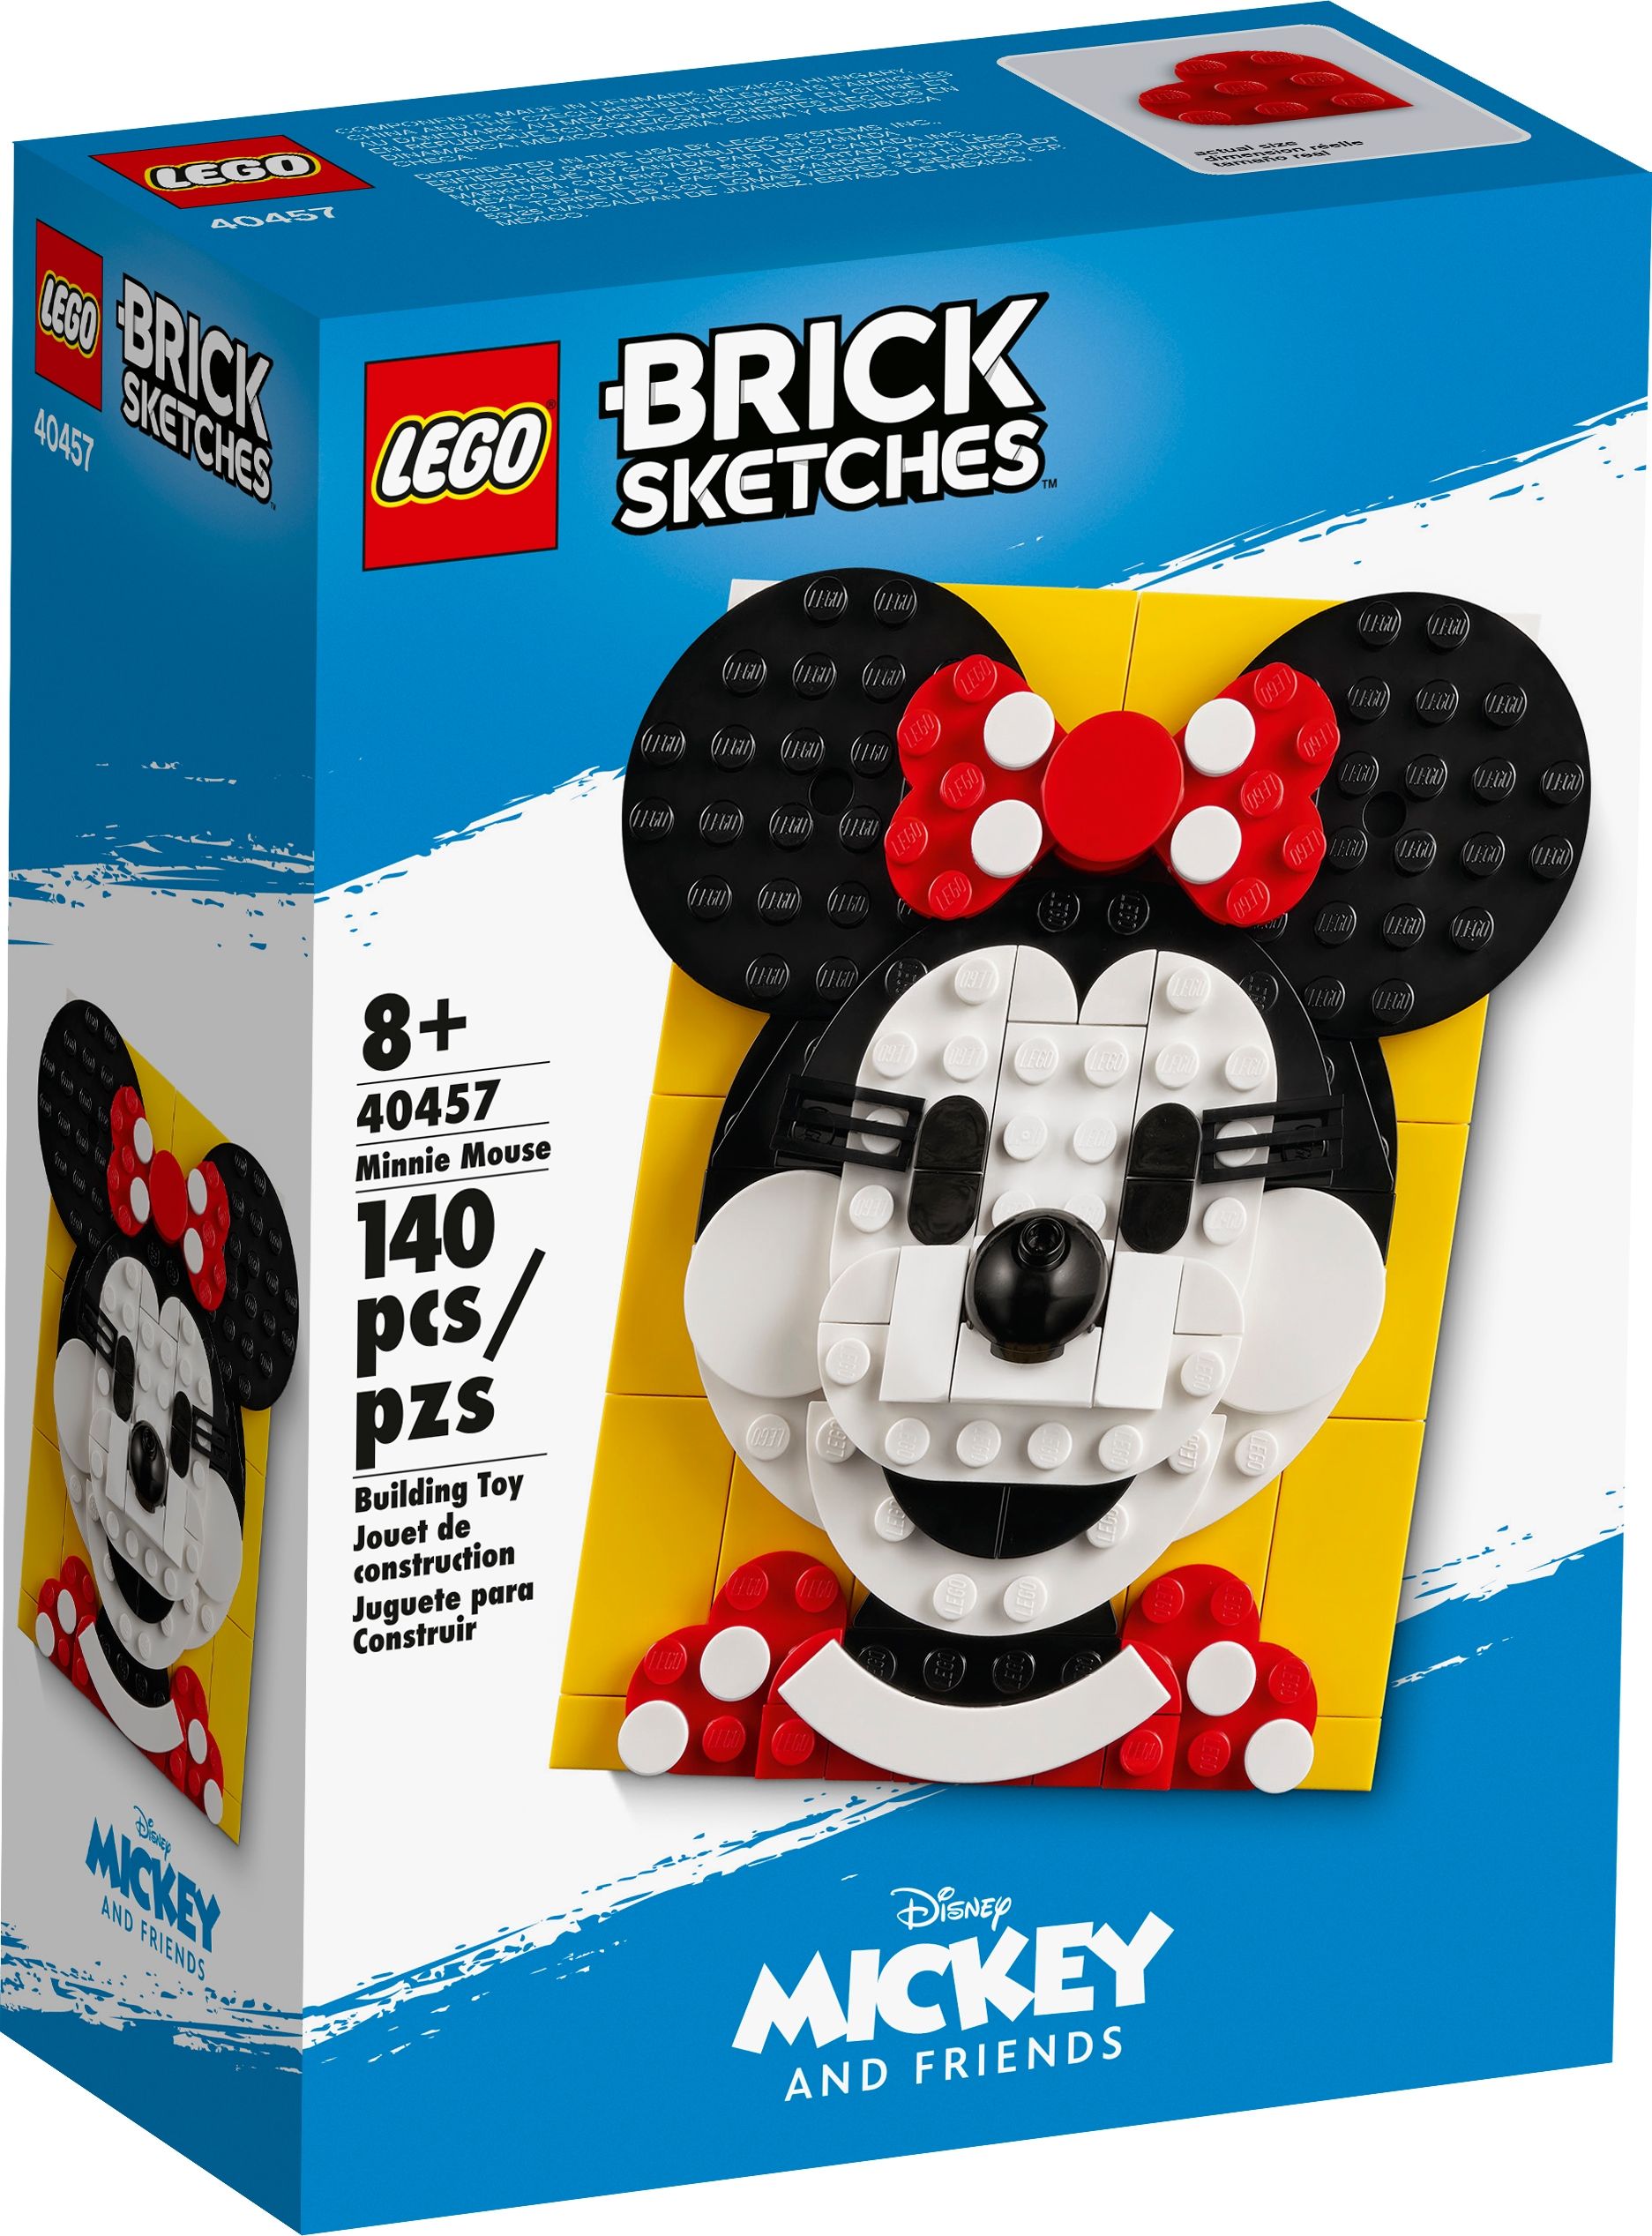 LEGO Brick Sketches 40457 Minnie Maus LEGO_40457_alt1.jpg